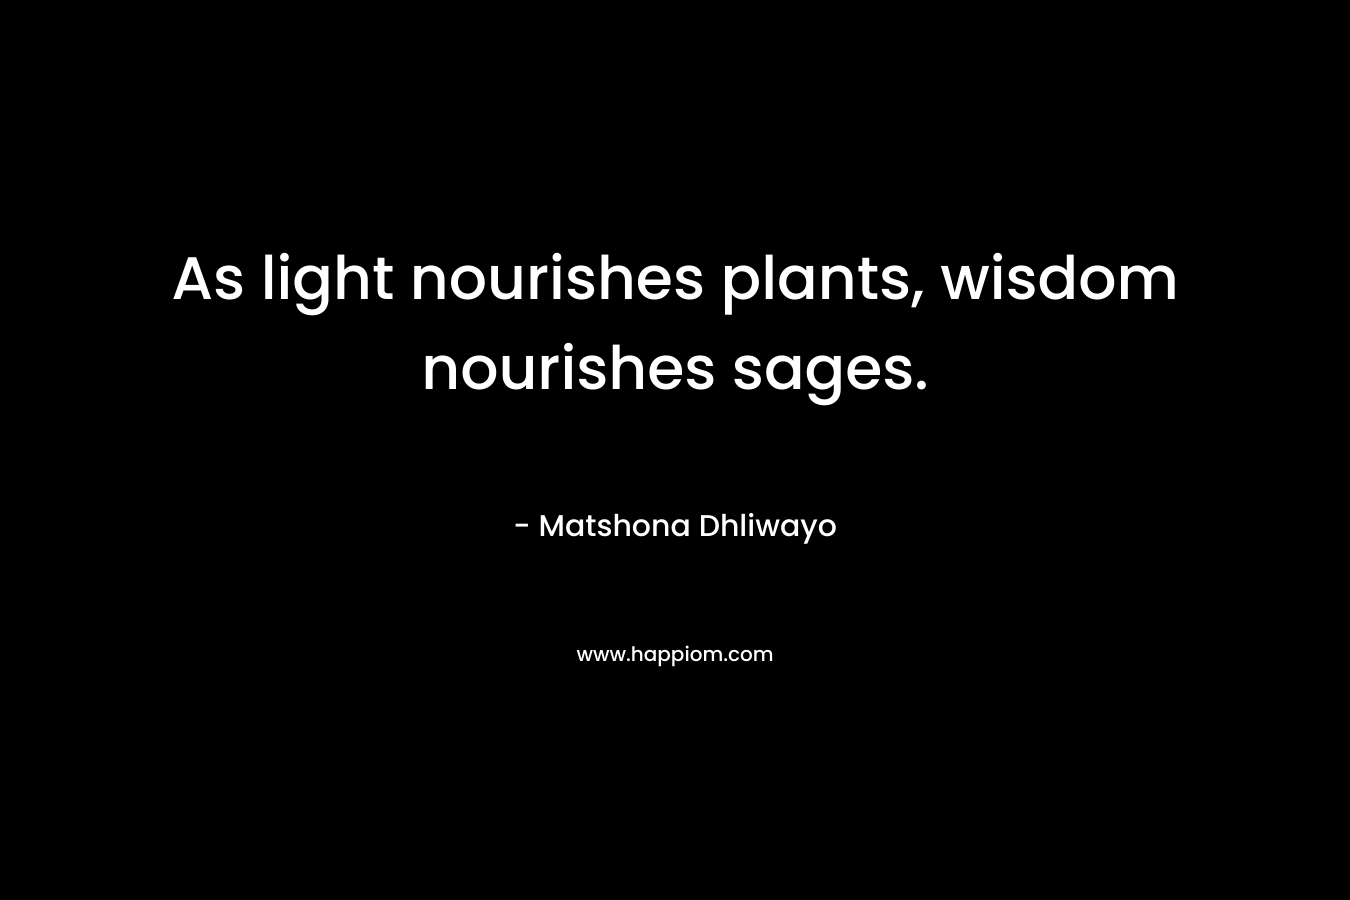 As light nourishes plants, wisdom nourishes sages.